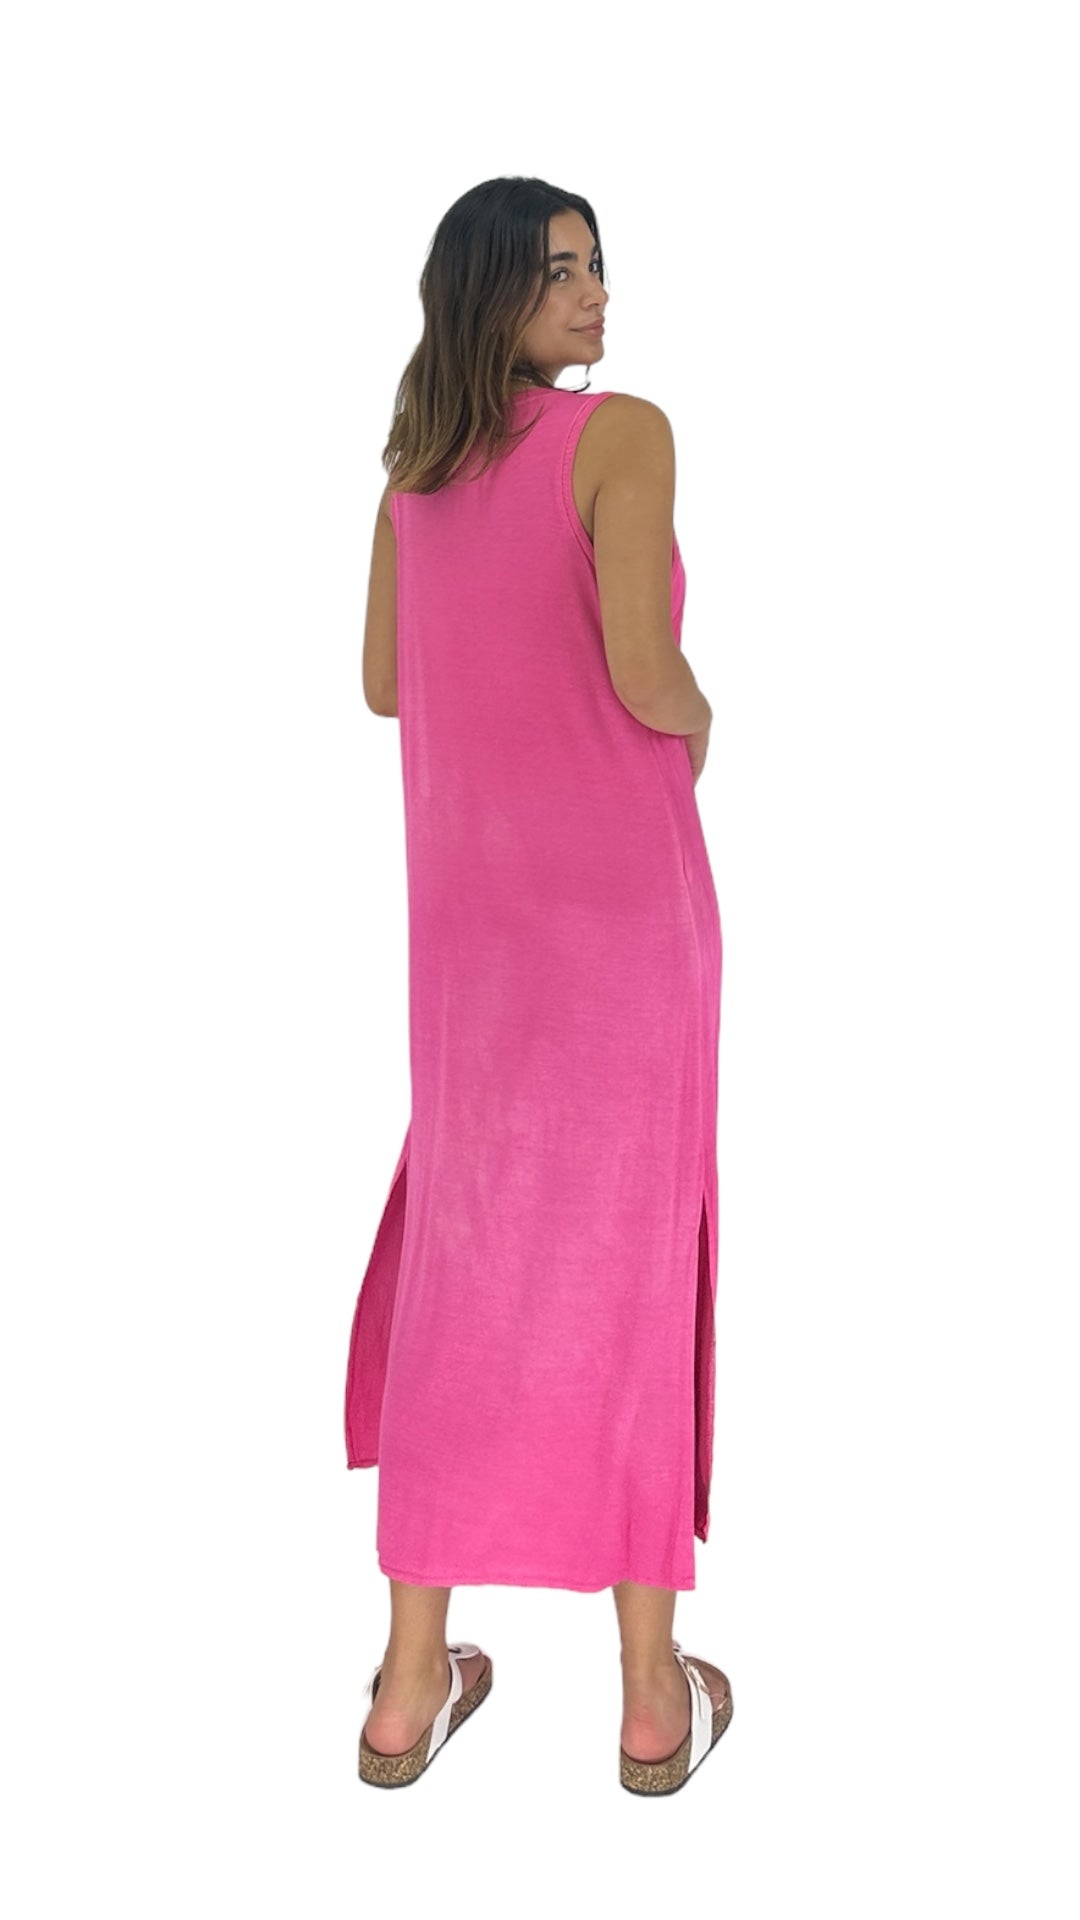 Mirage dress in pink